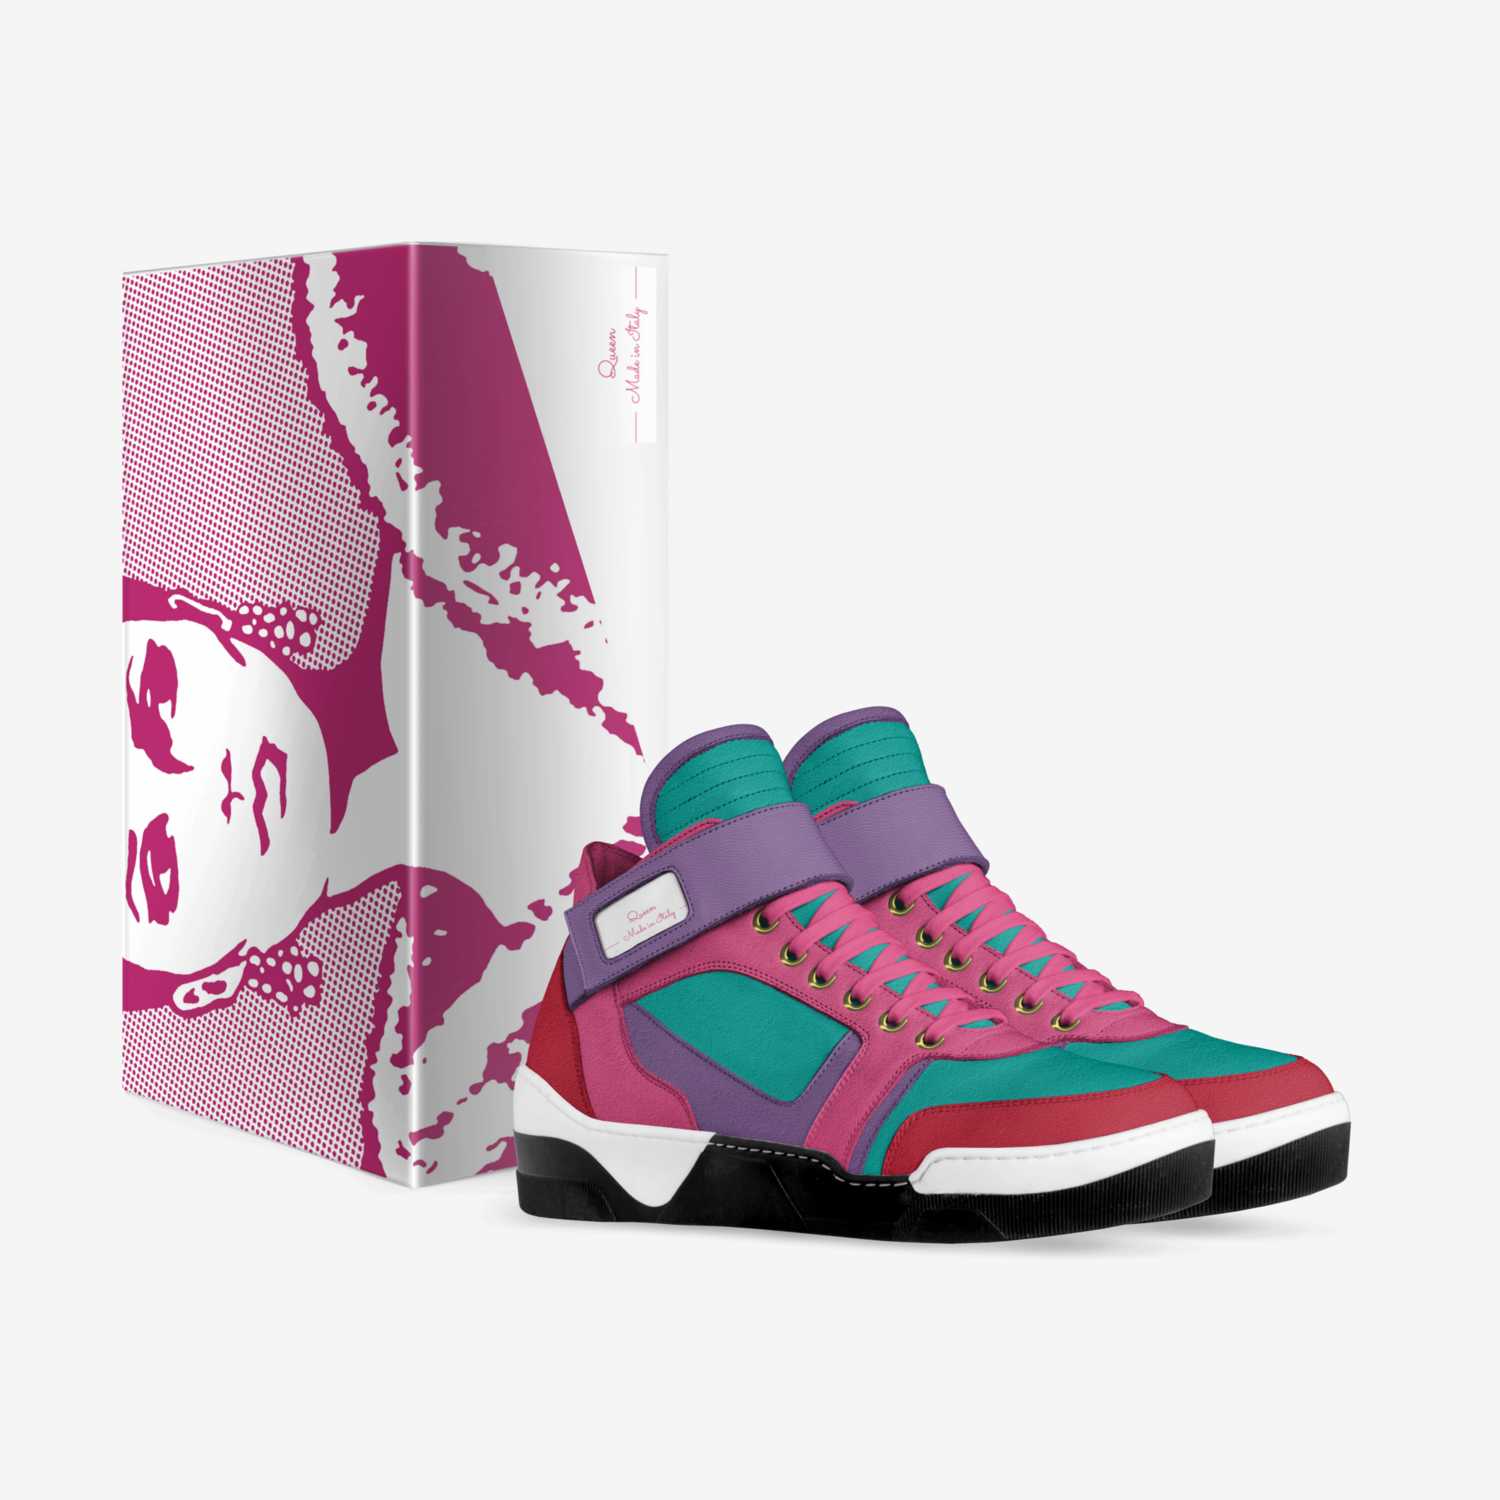 Queen custom made in Italy shoes by Ciomariz Morillo | Box view